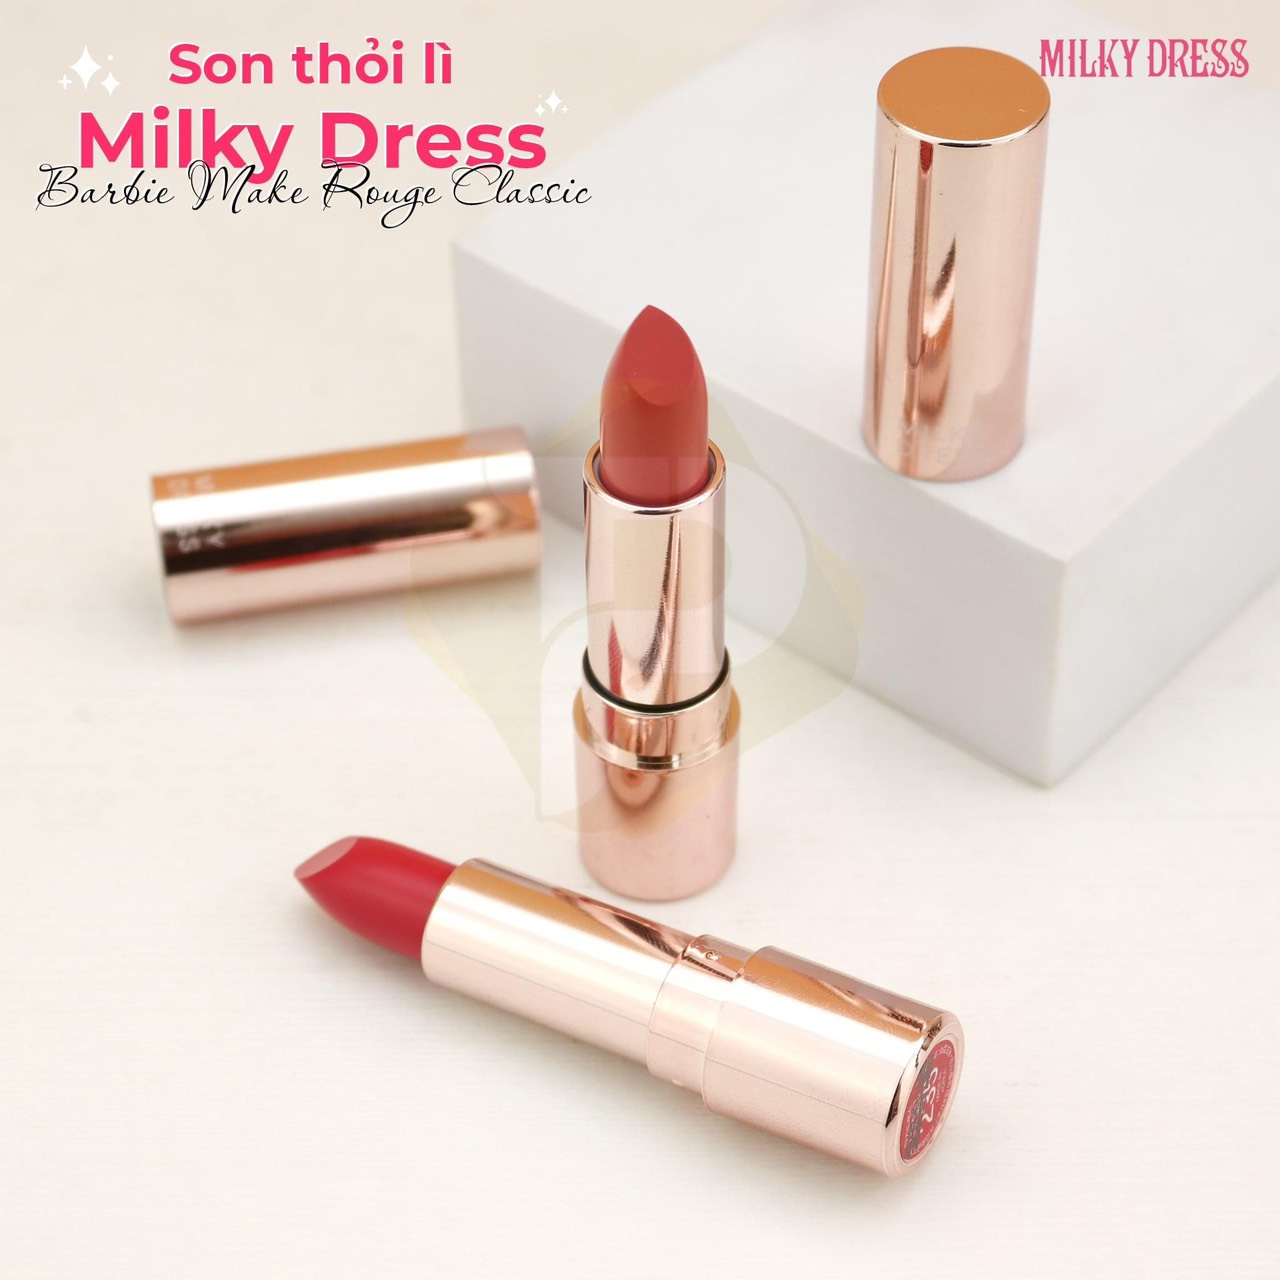 Milky Dress - Son lì Barbie Make Rouge Classic M445